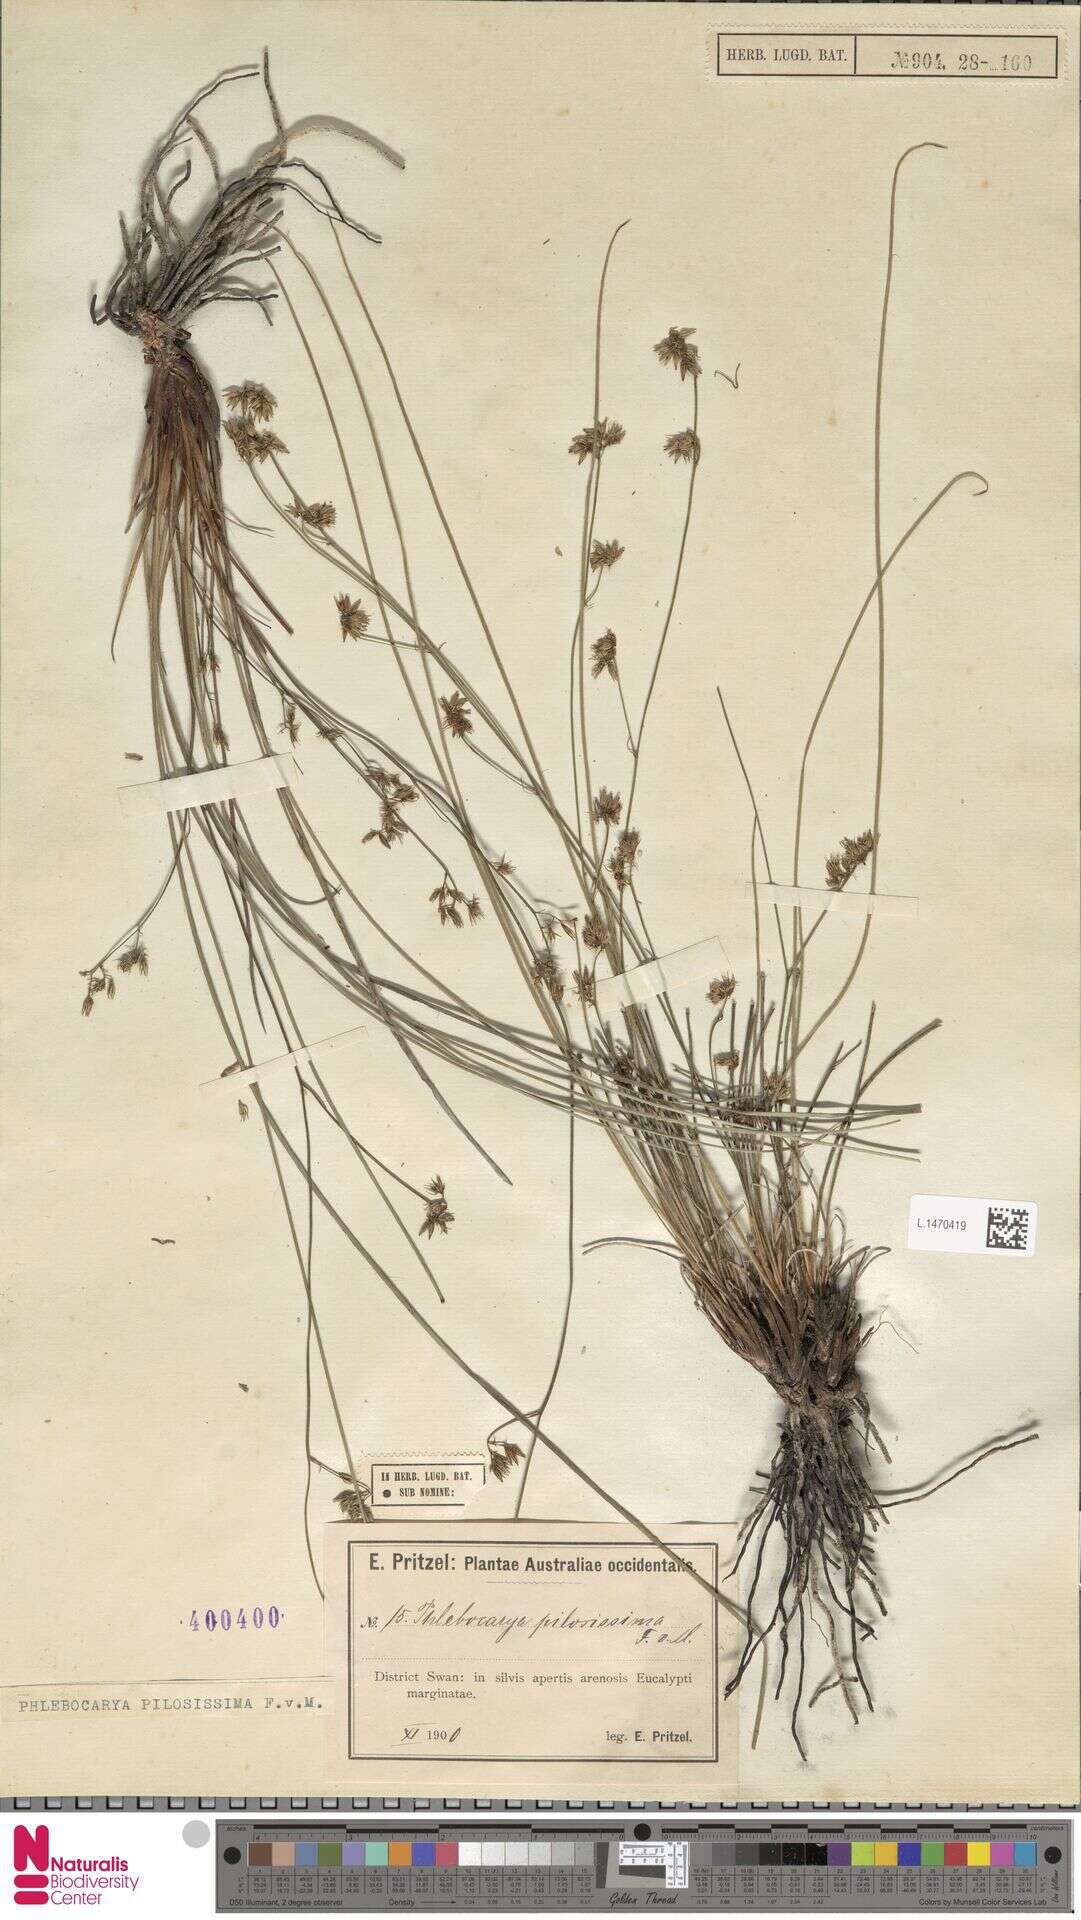 Image of Phlebocarya pilosissima (F. Muell.) Benth.